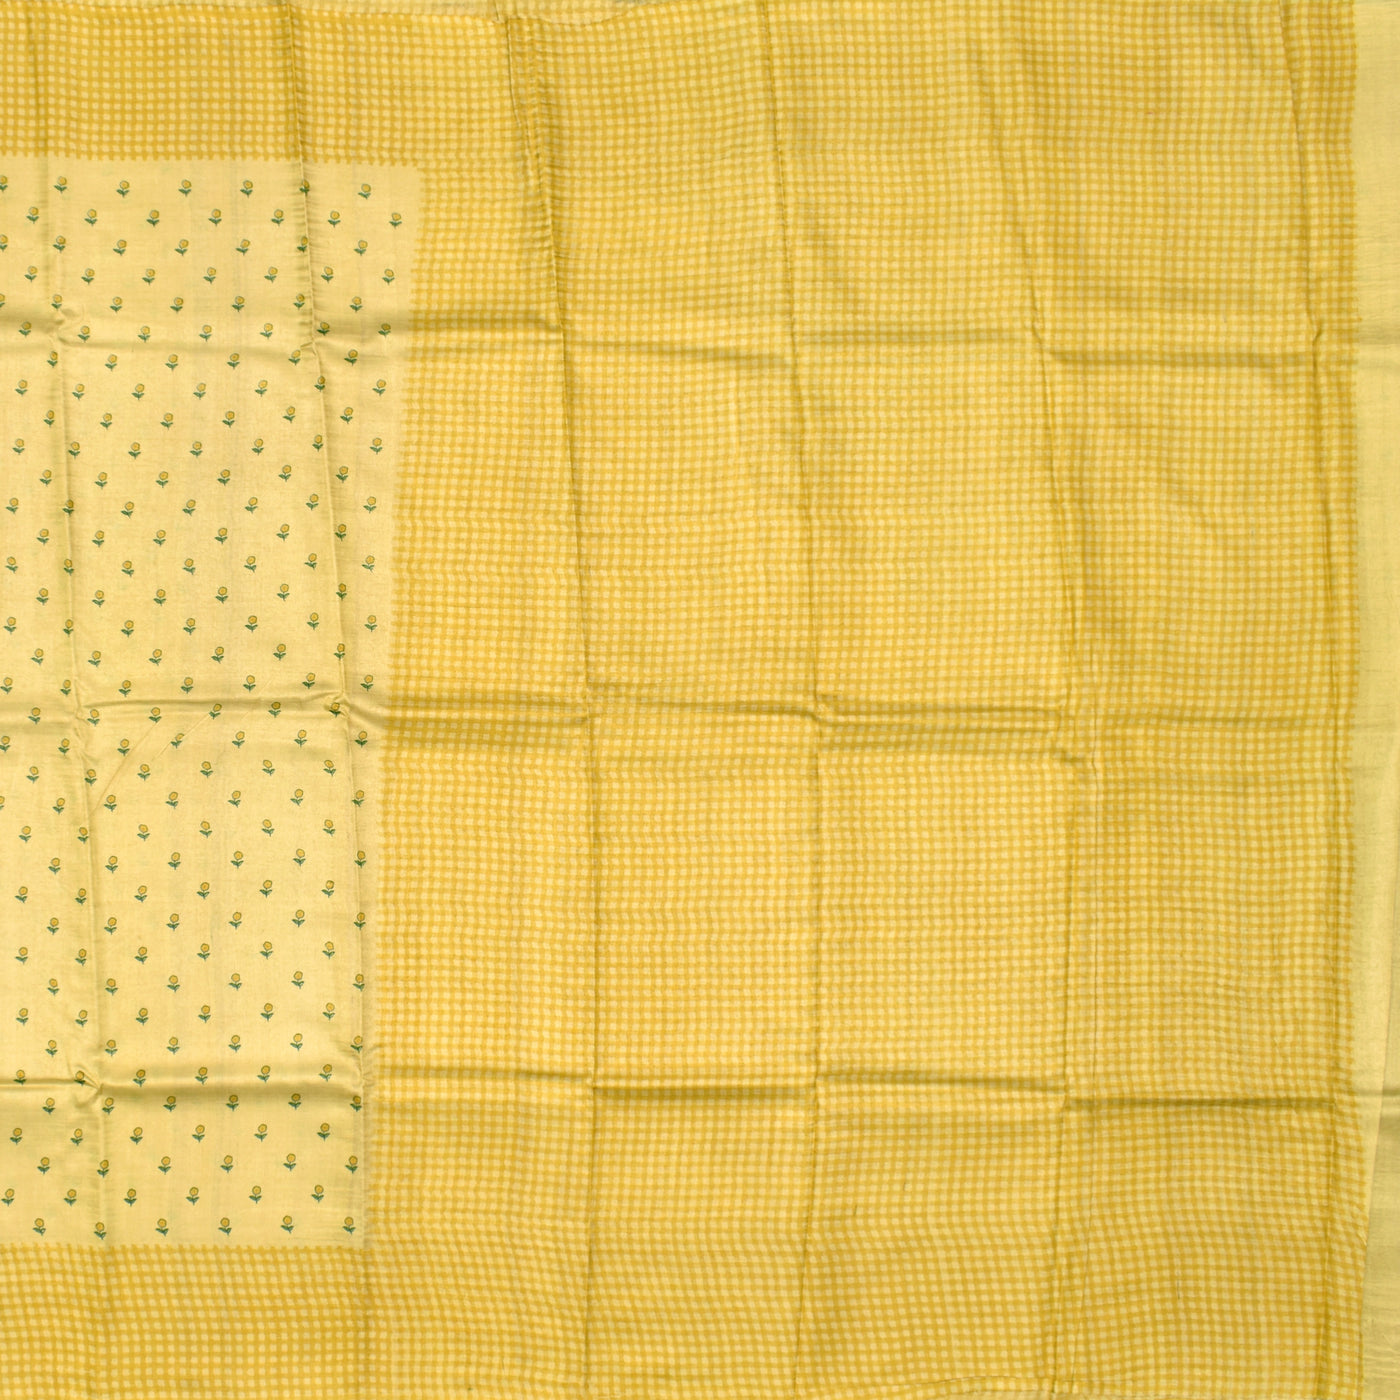 Light Yellow Tussar Silk Saree with Small Flower Printed Design